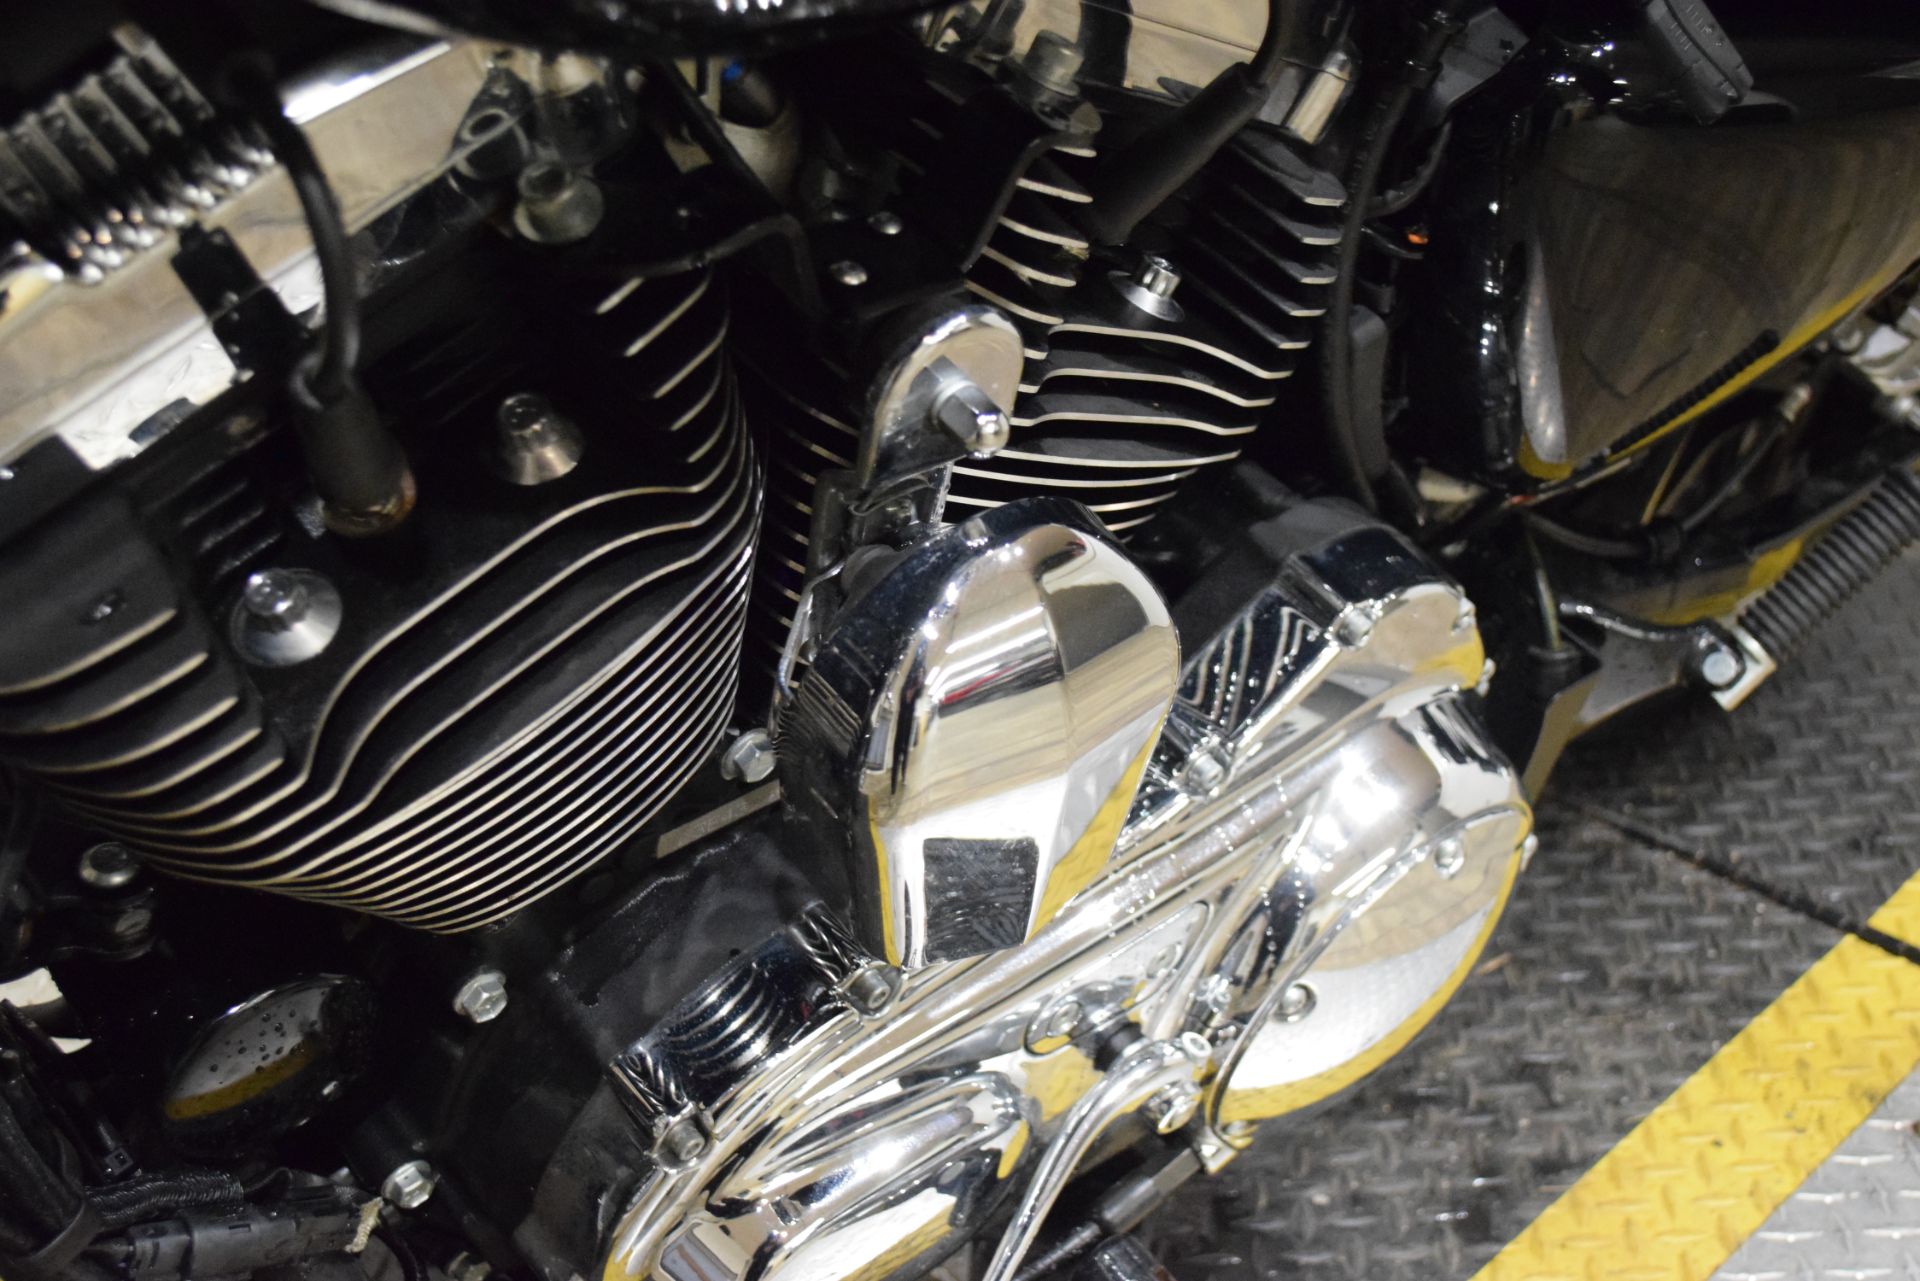 2014 Harley-Davidson SuperLow® 1200T in Wauconda, Illinois - Photo 19